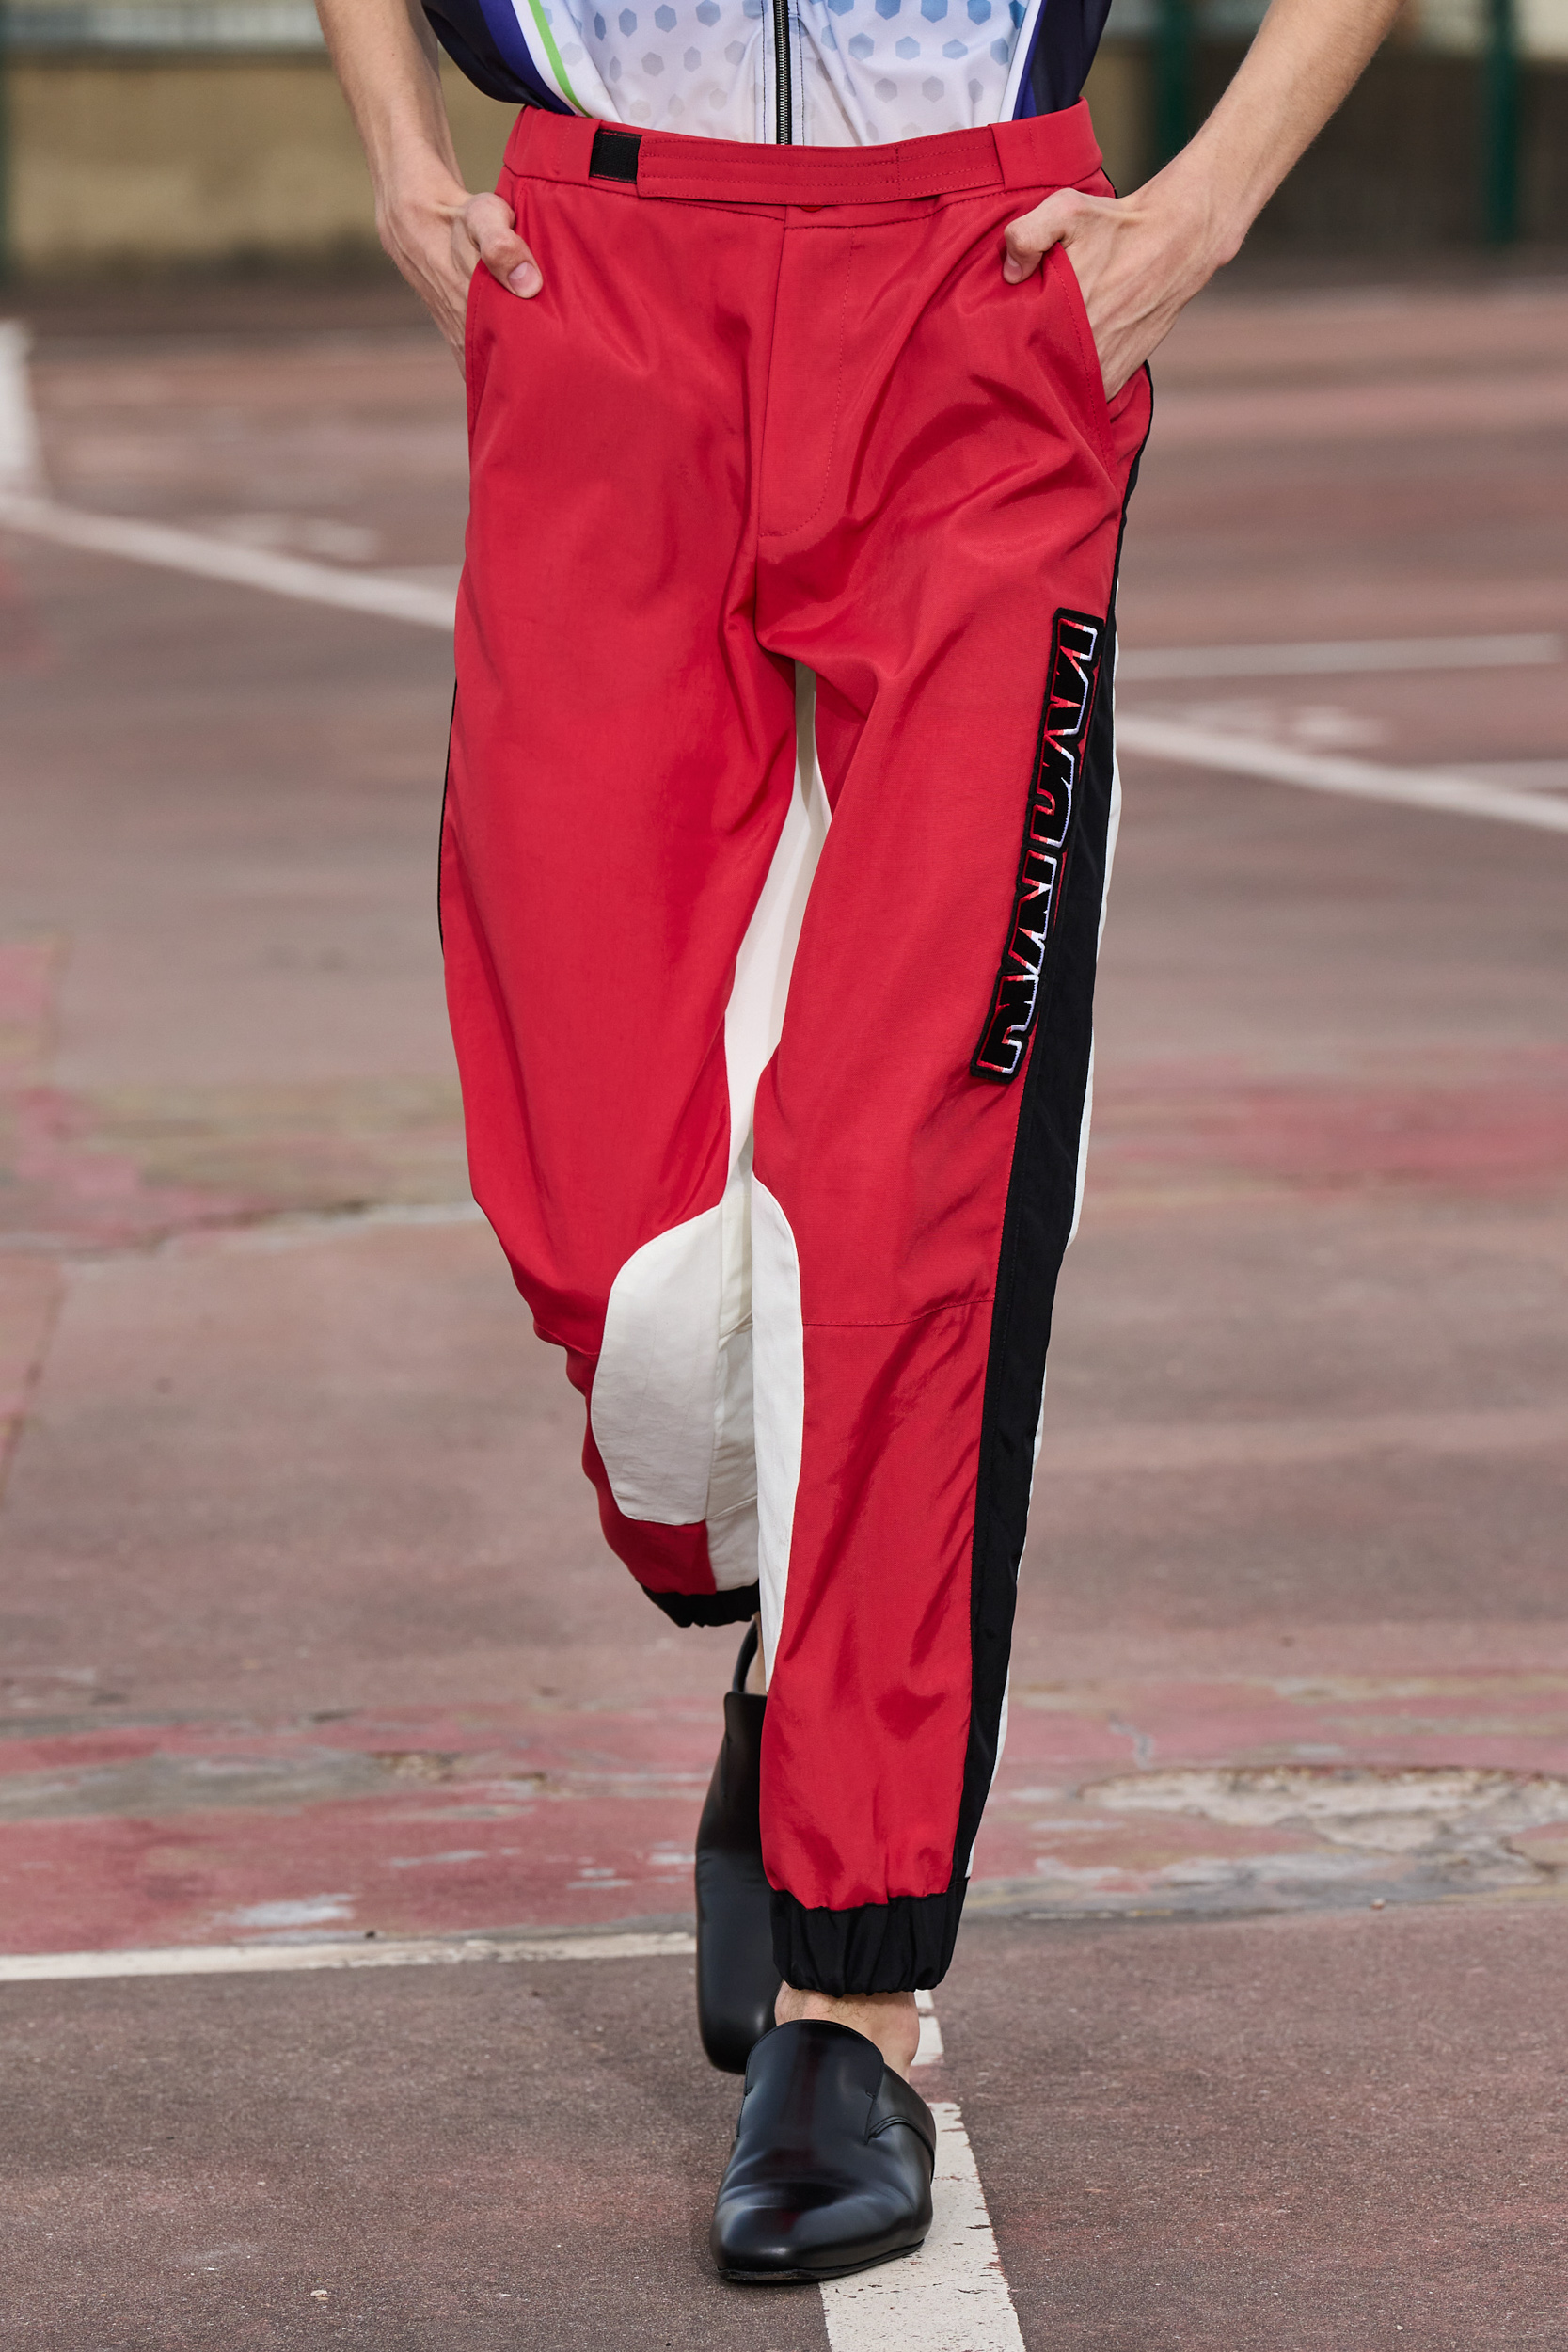 Dries Van Noten Spring 2023 Men's Fashion Show Details Fashion Show